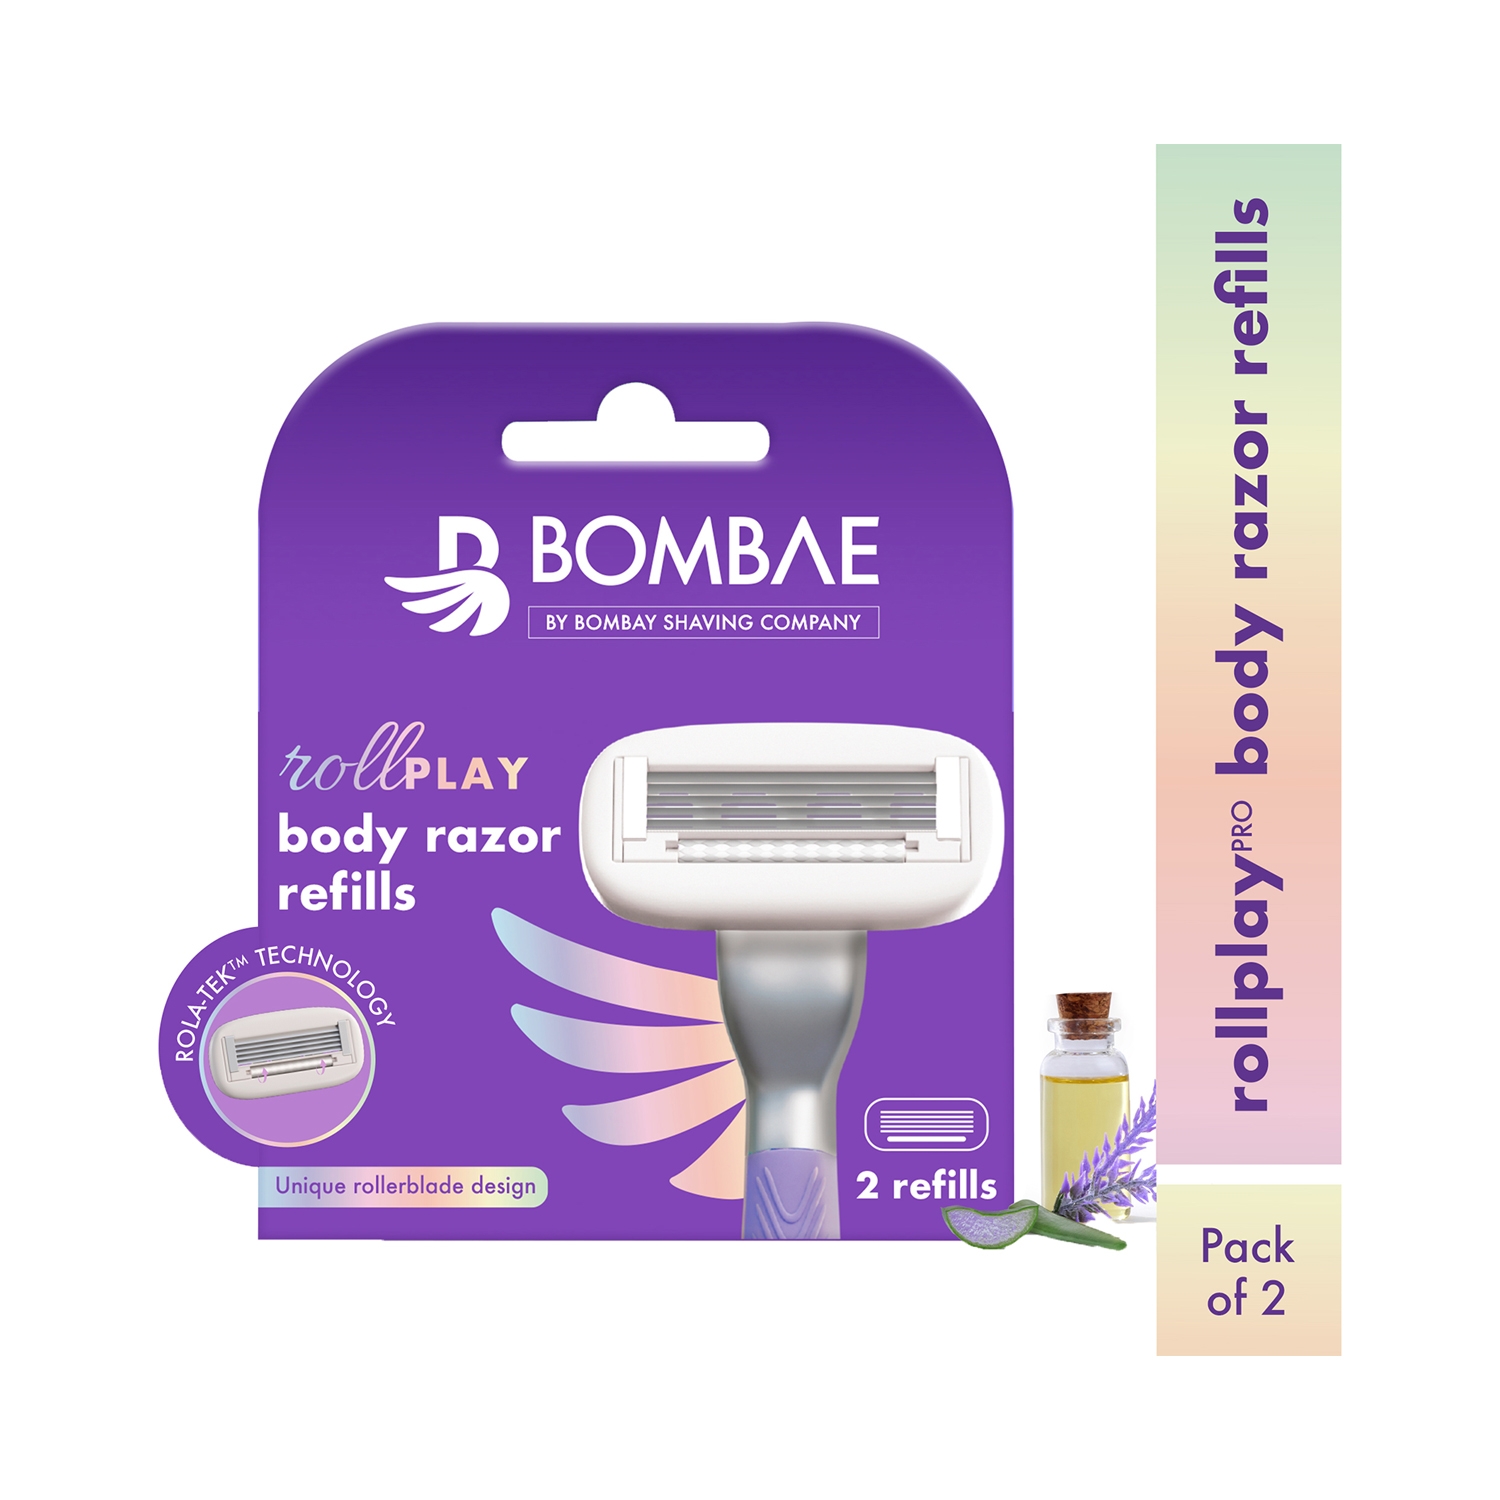 Bombae | Bombae Rollplay Body Razor Refills - White (2Pcs)